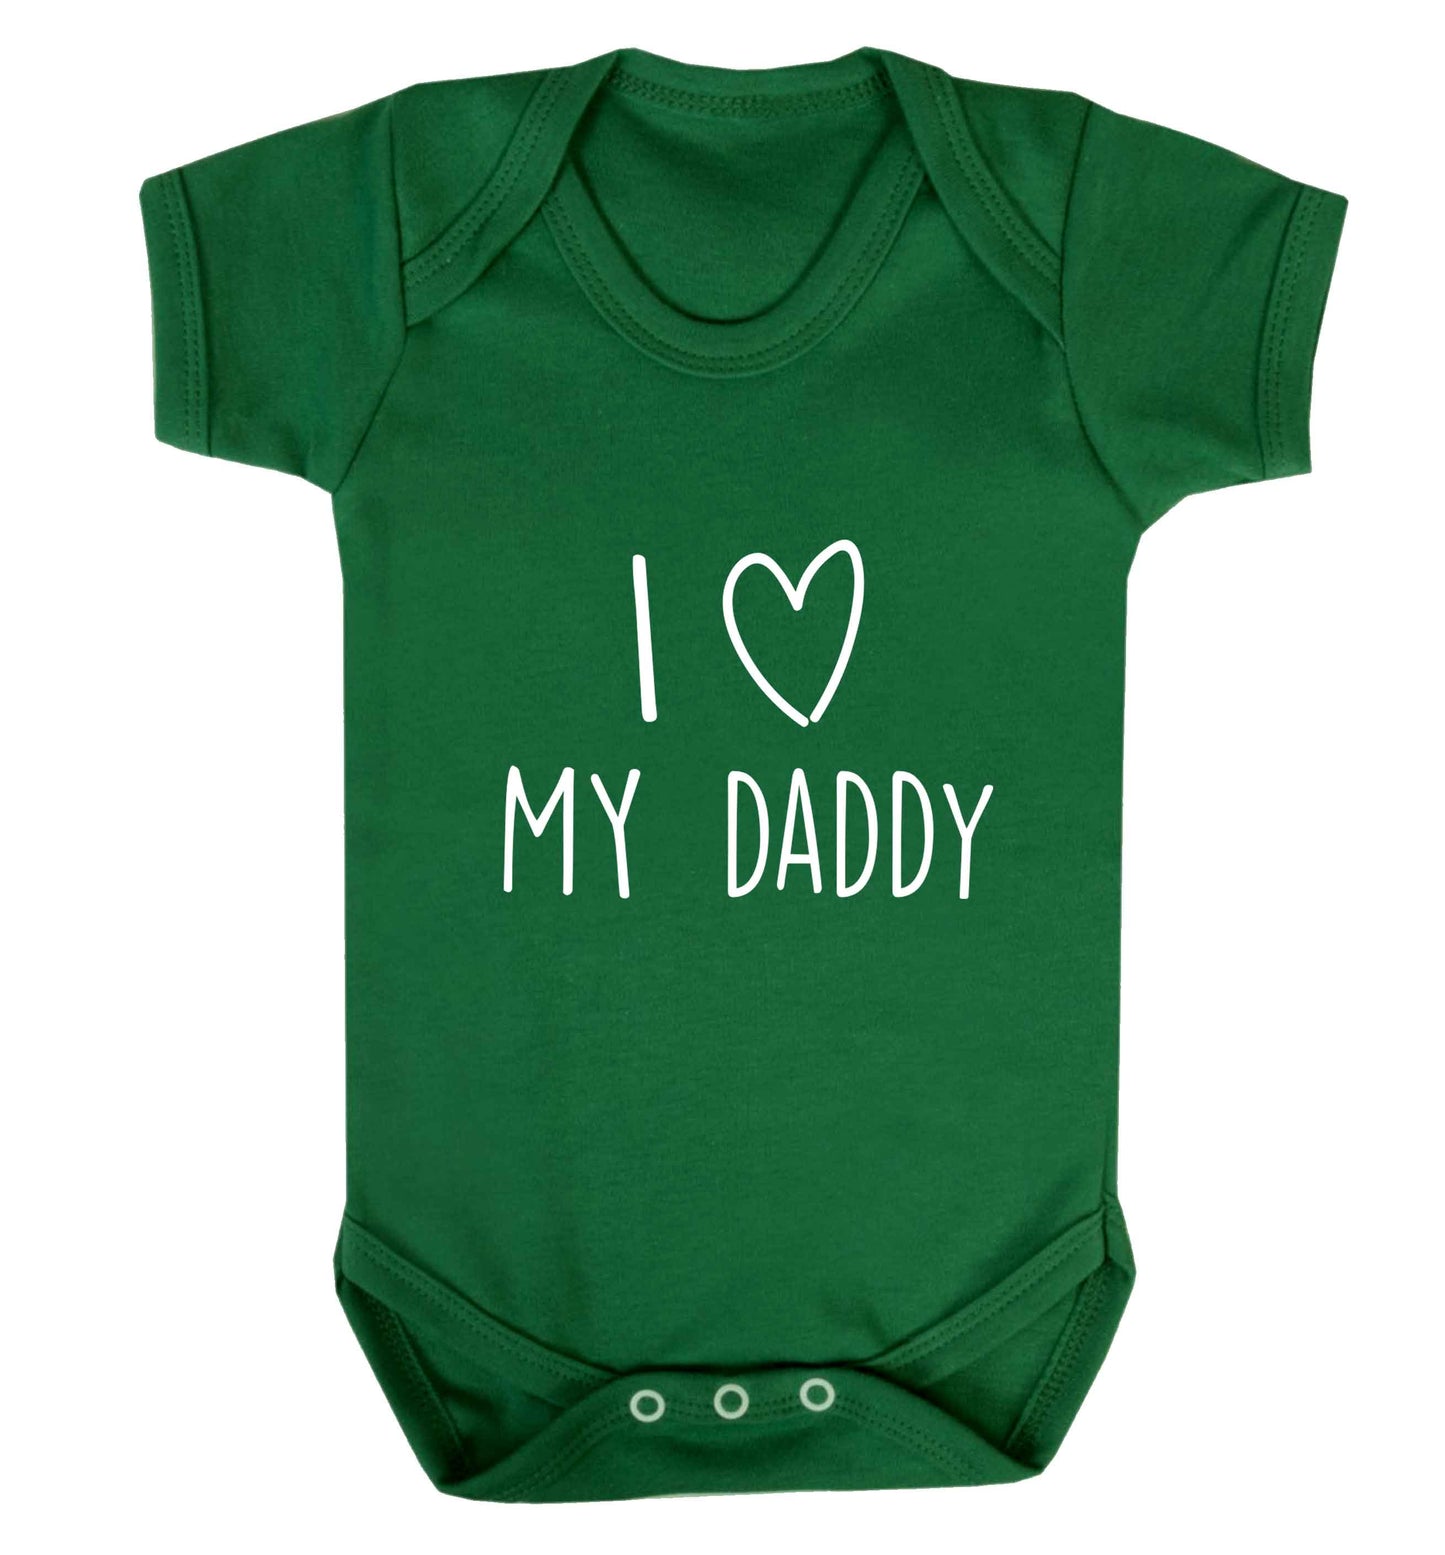 I love my daddy baby vest green 18-24 months